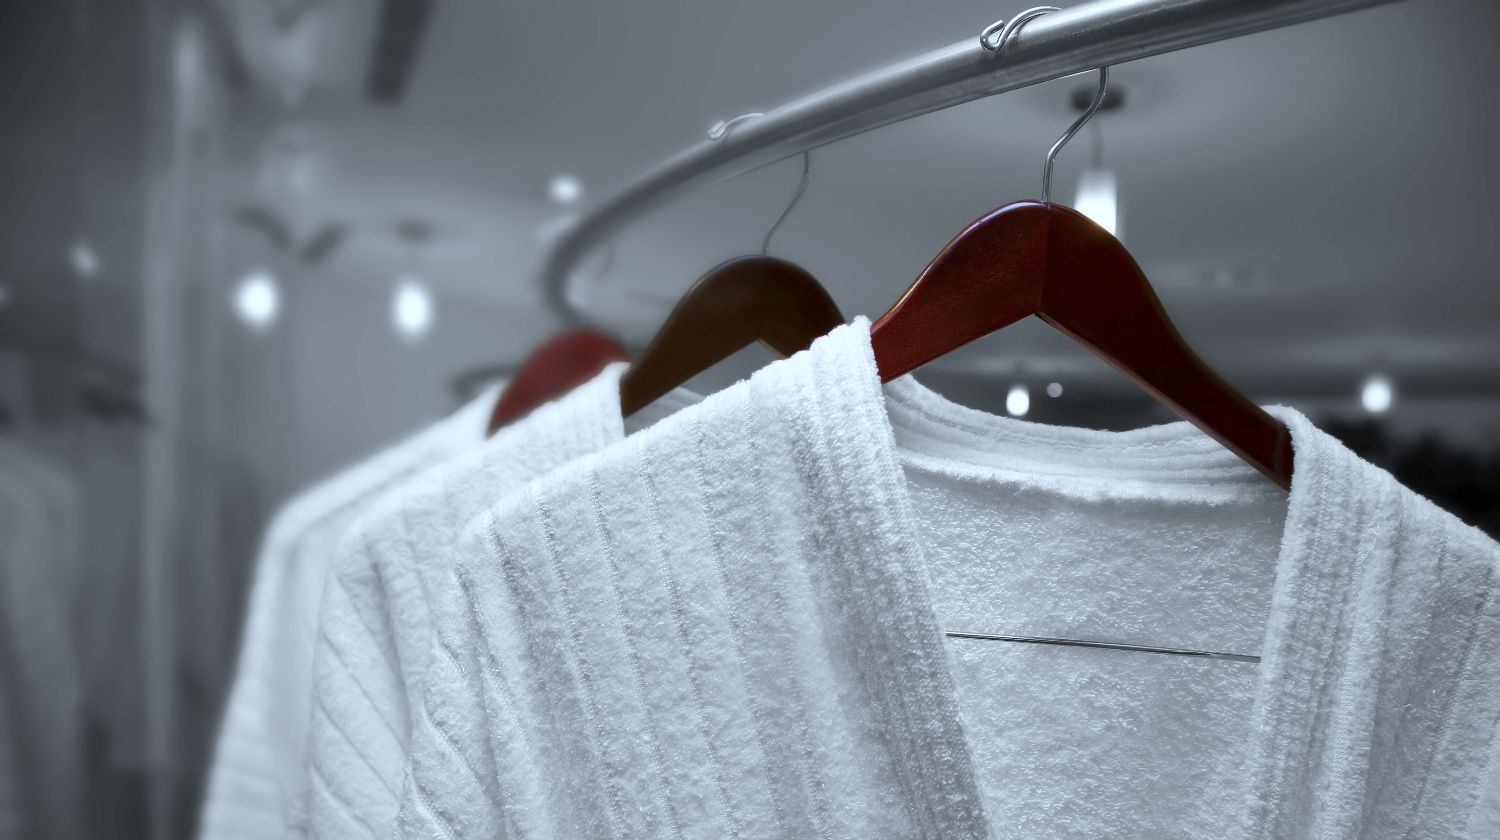 https://robemart.com/blog/wp-content/uploads/2019/07/white-robes-wooden-hangers-hotel-towels-ss-Featured.jpg